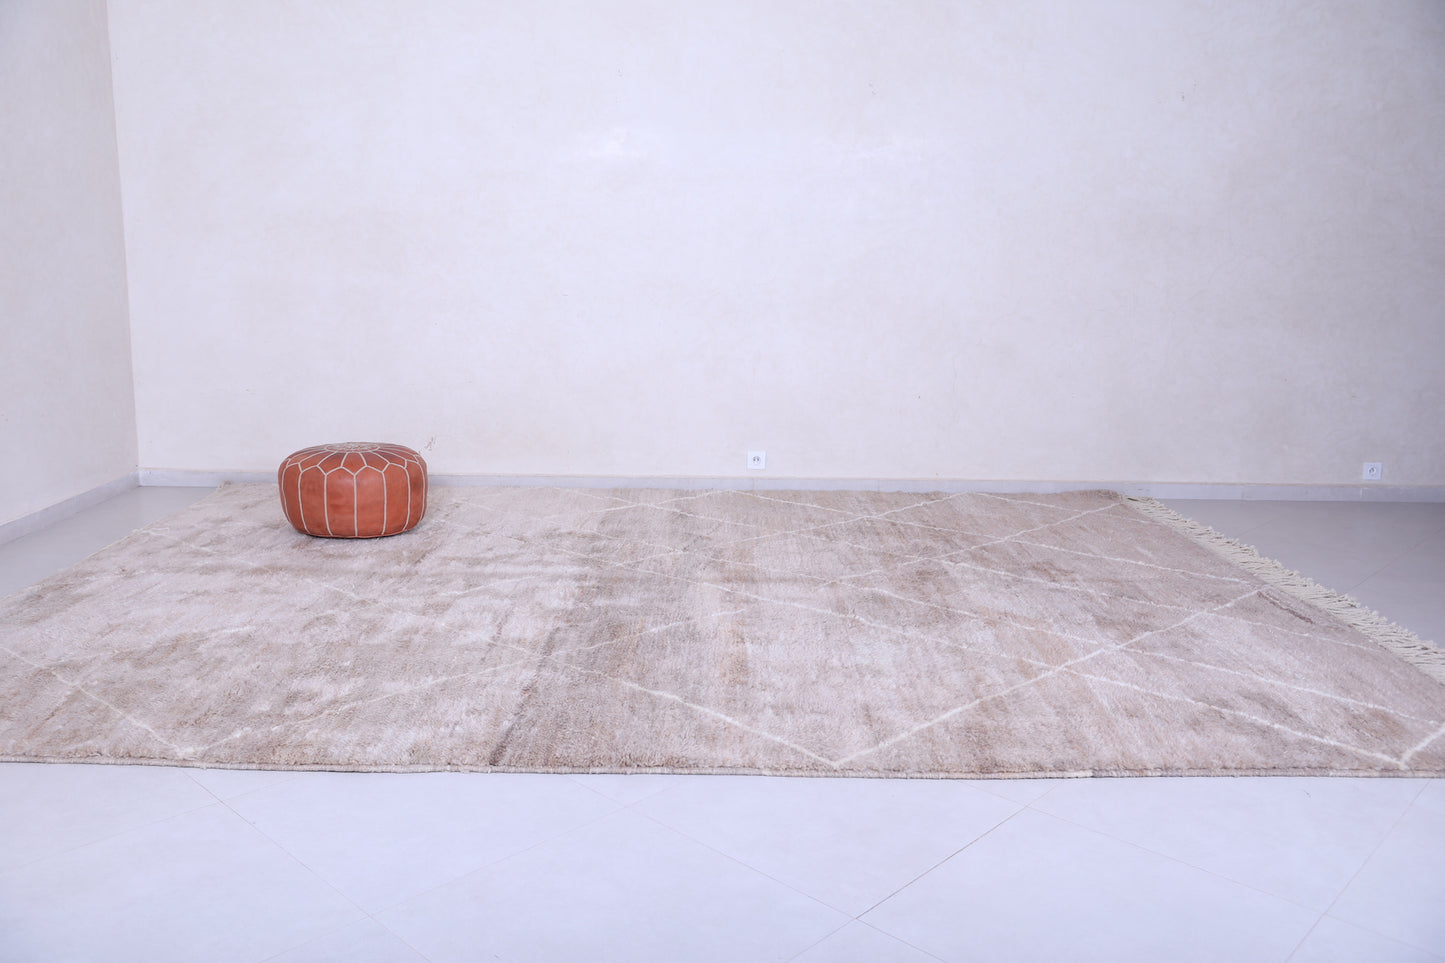 Authentic Mrirt rug - Berber rug - wool rug